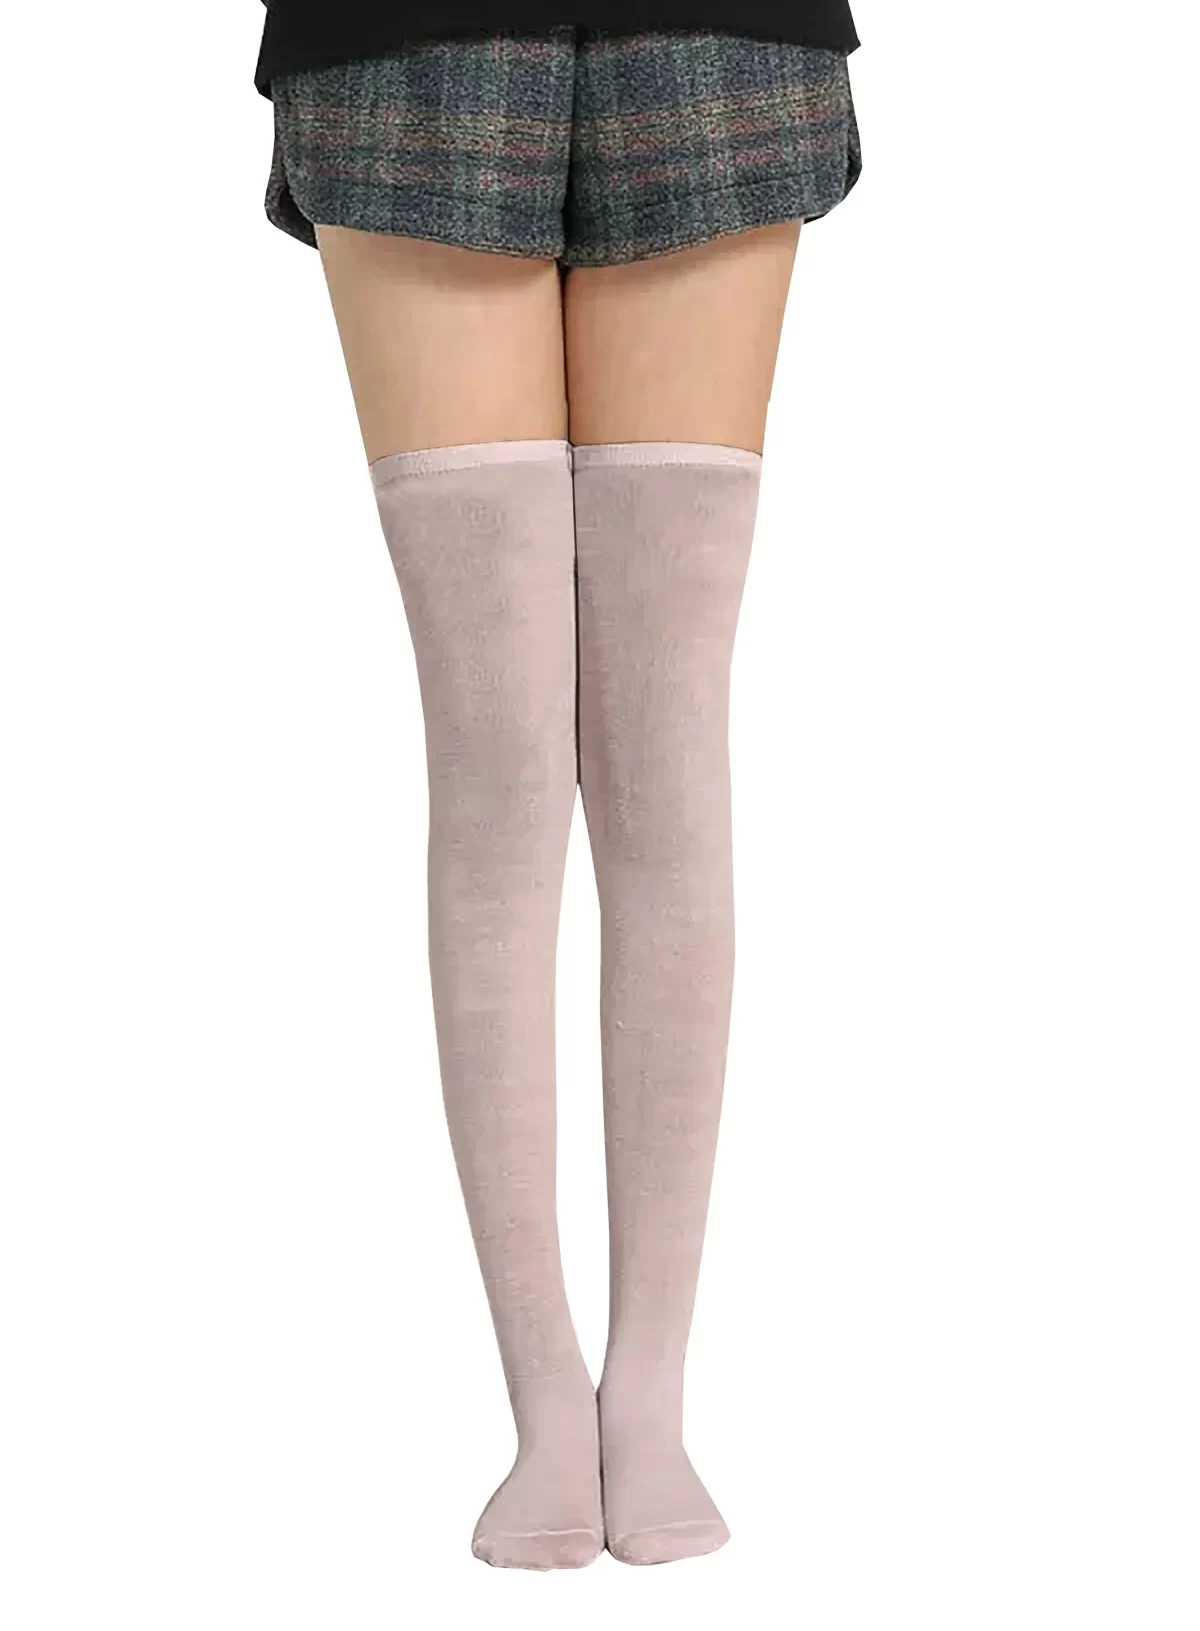 Skin Girls and Women's Thigh High Stocking/Socks ( Free Size )1